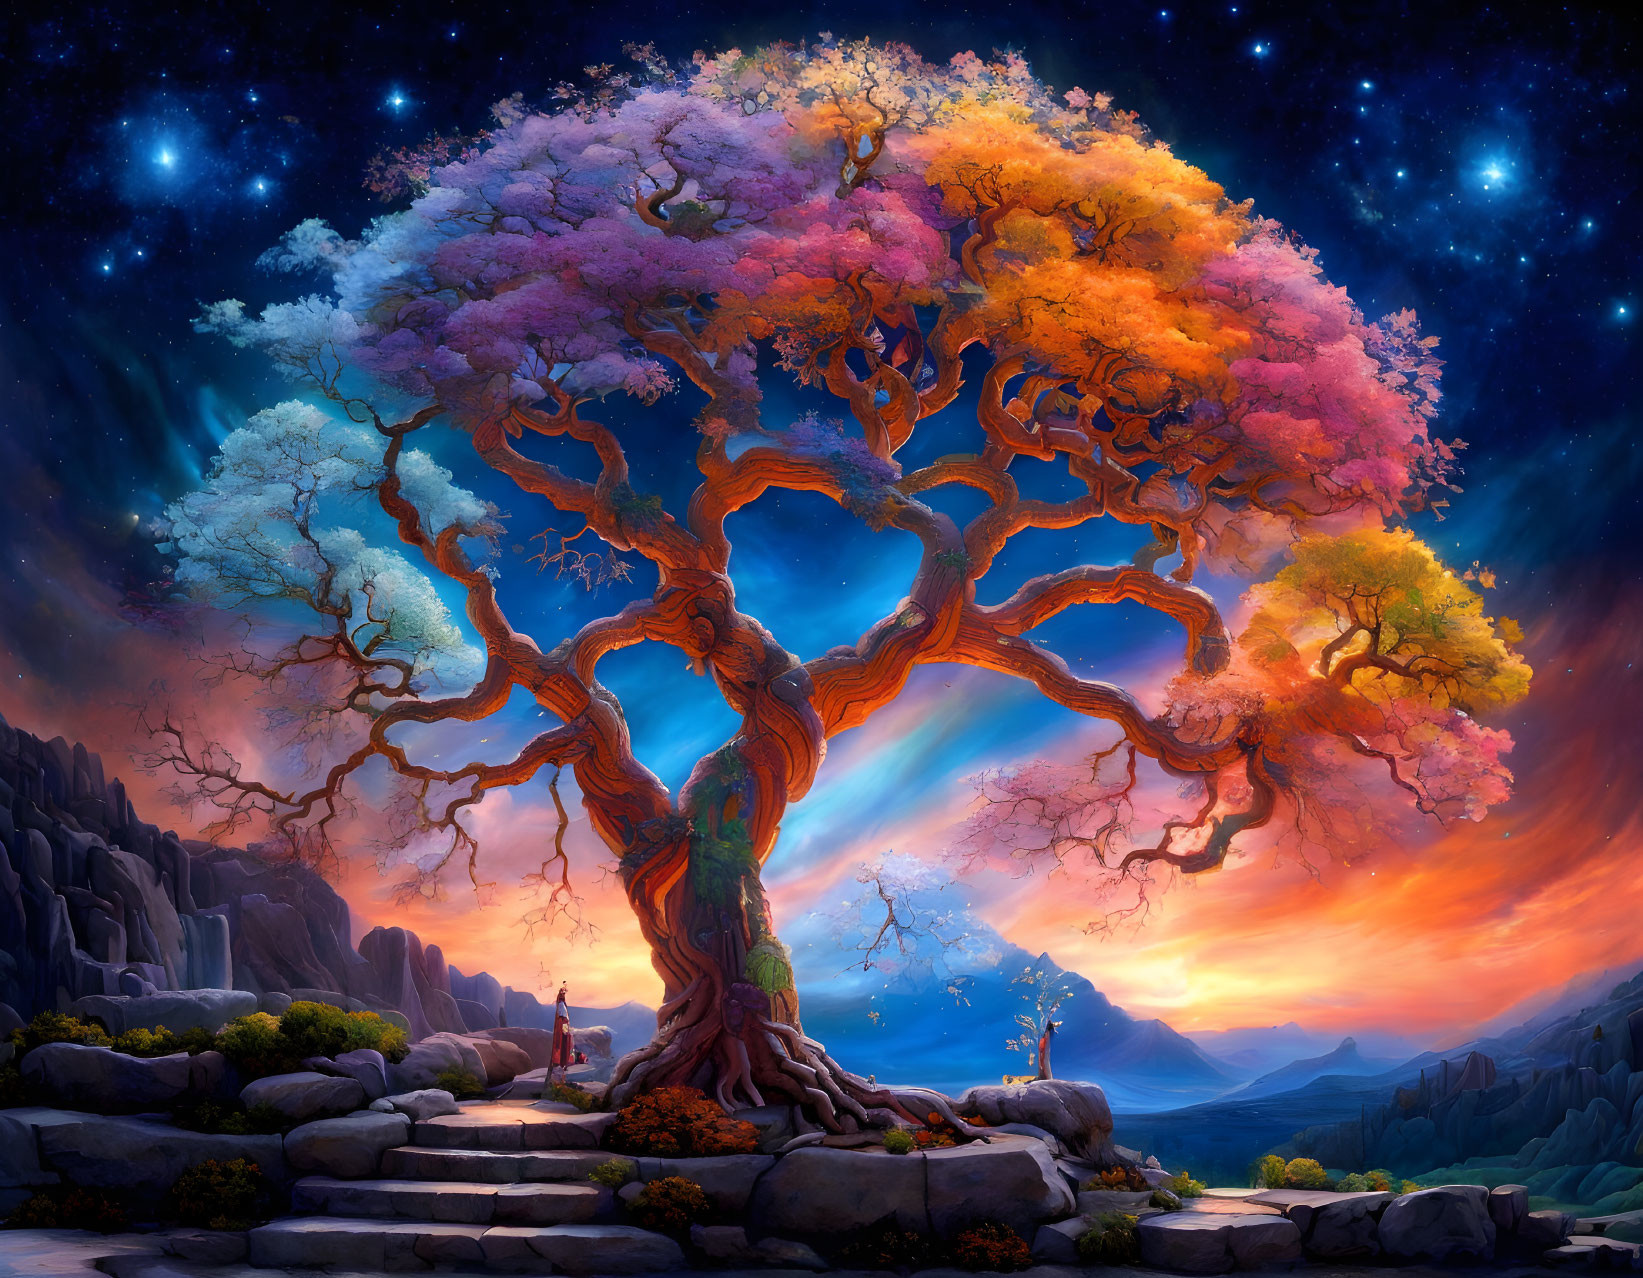 tree of life across the starry night